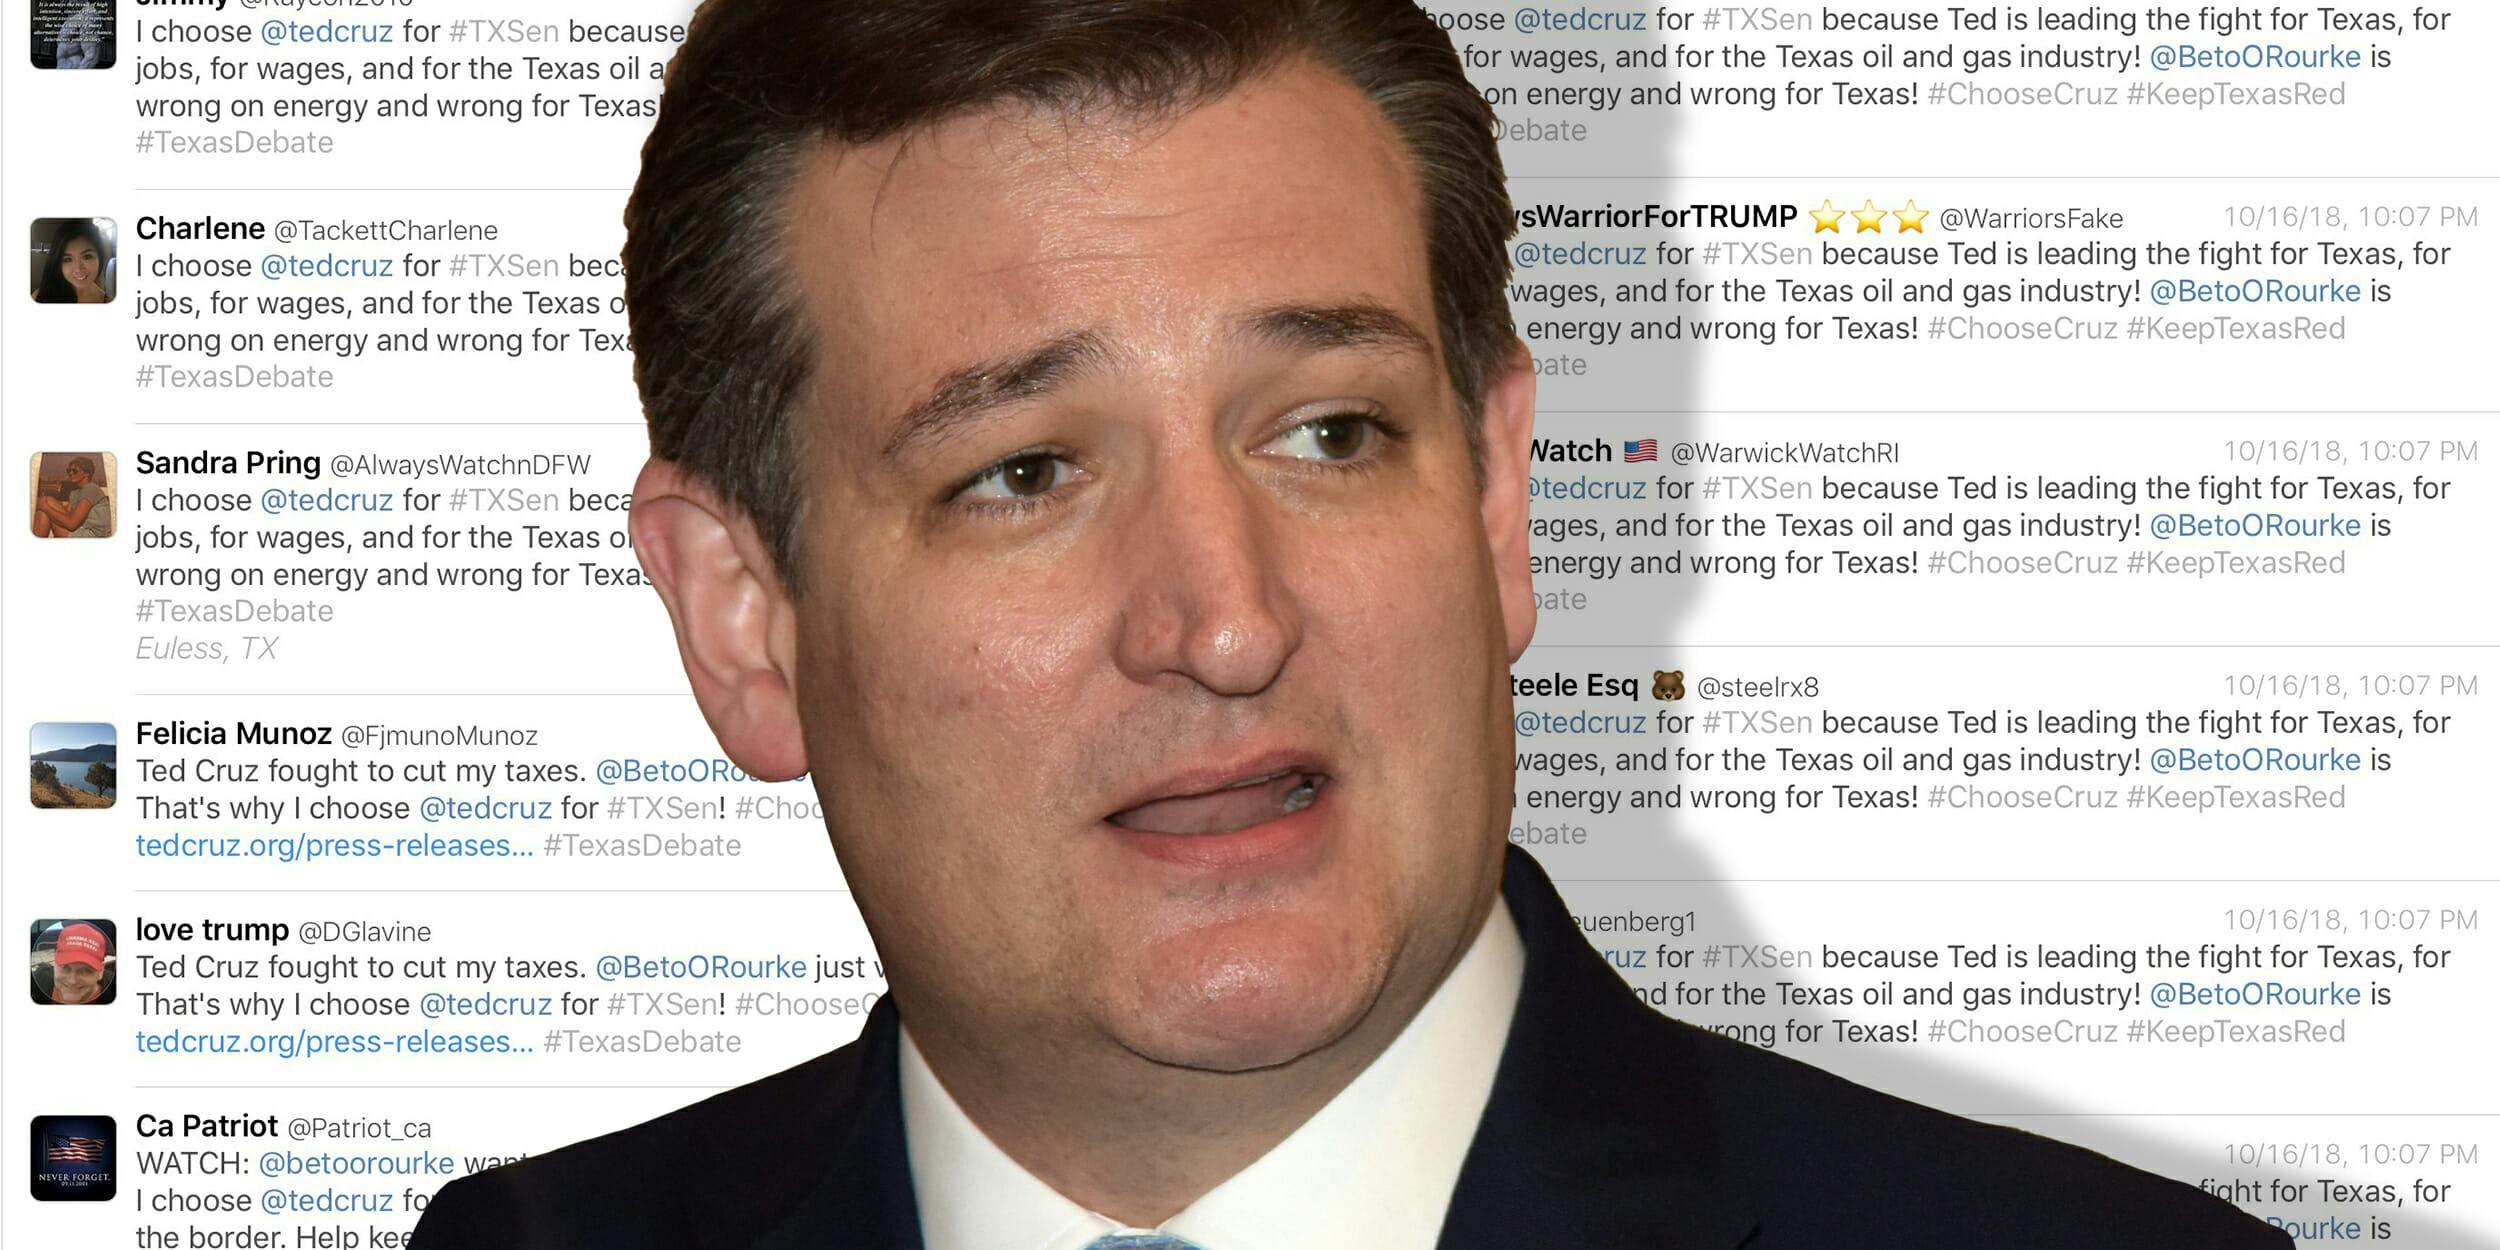 No, Ted Cruz was not utilizing Cambridge Analytica last night to push tweets